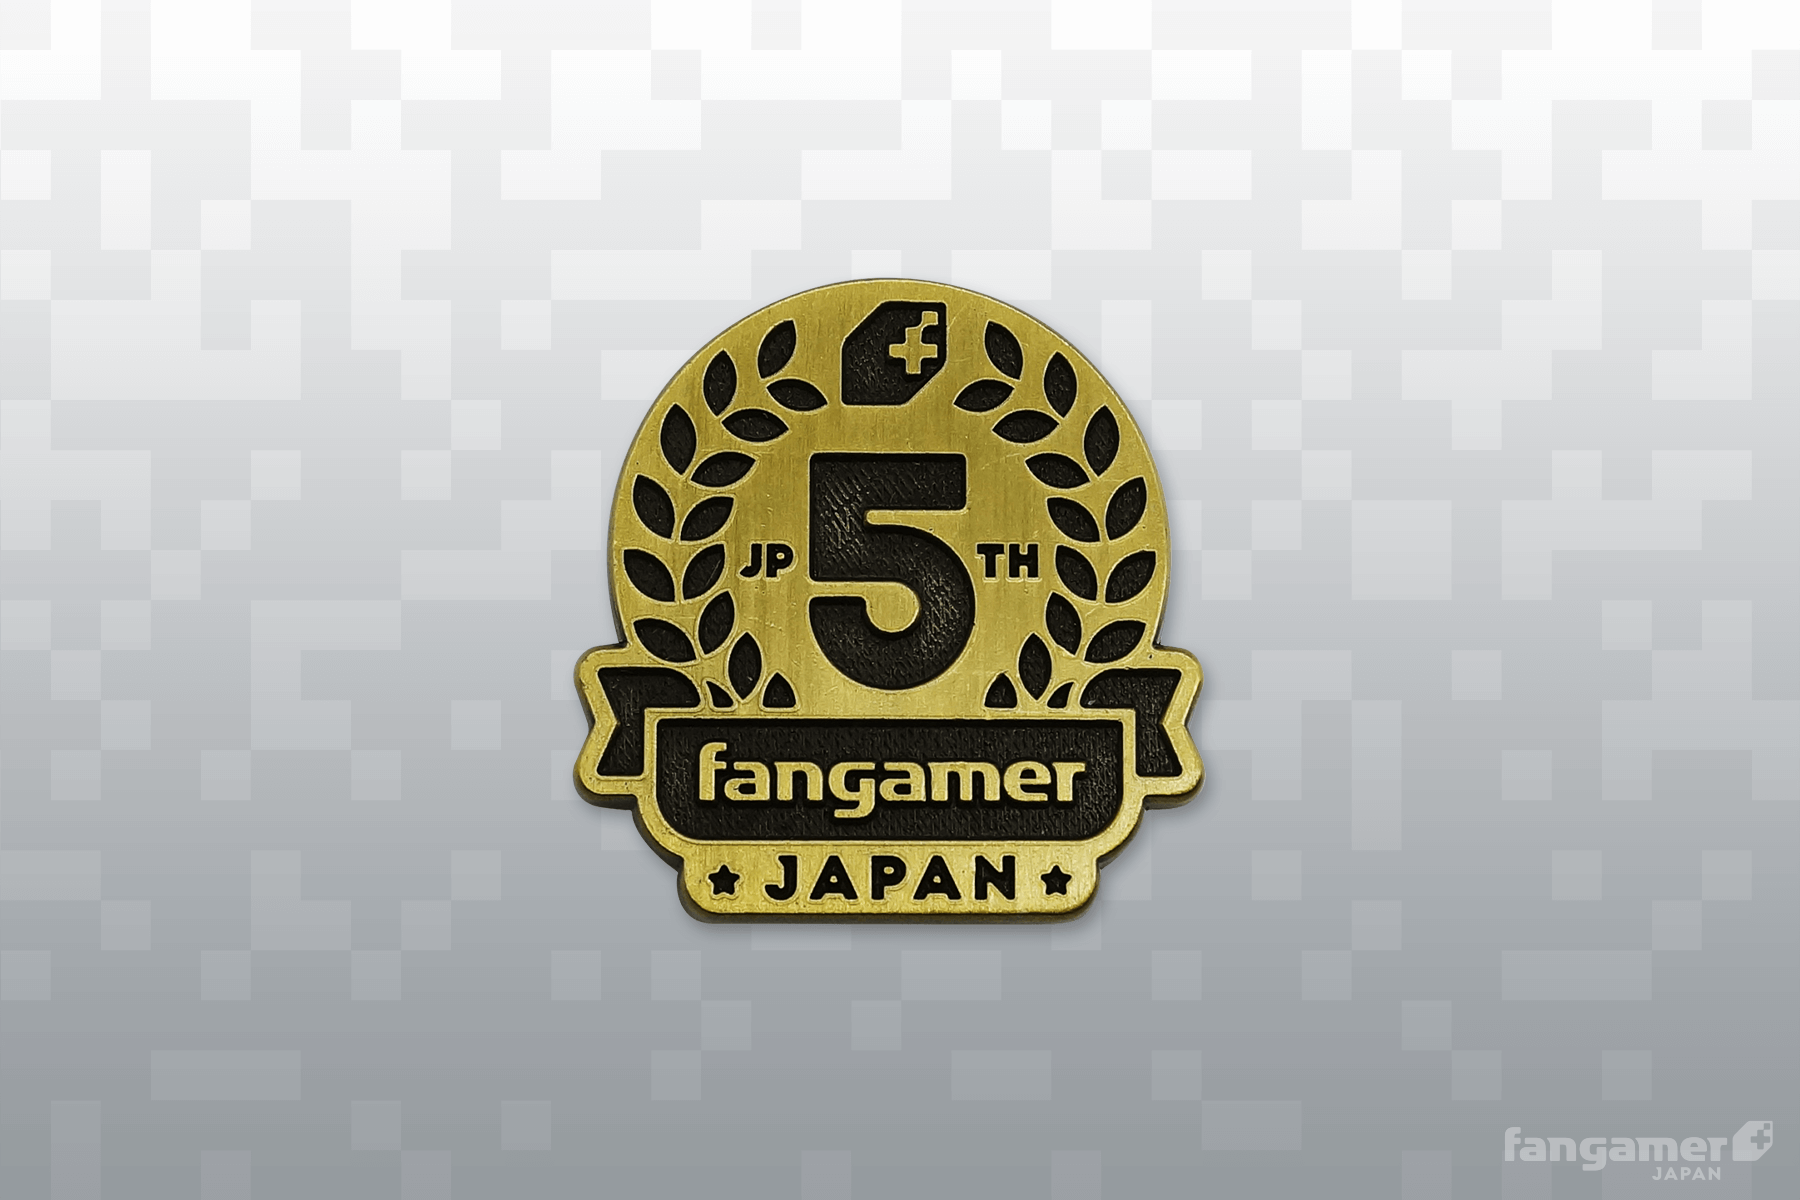 Fangamer Japan 5周年記念ピンバッジ